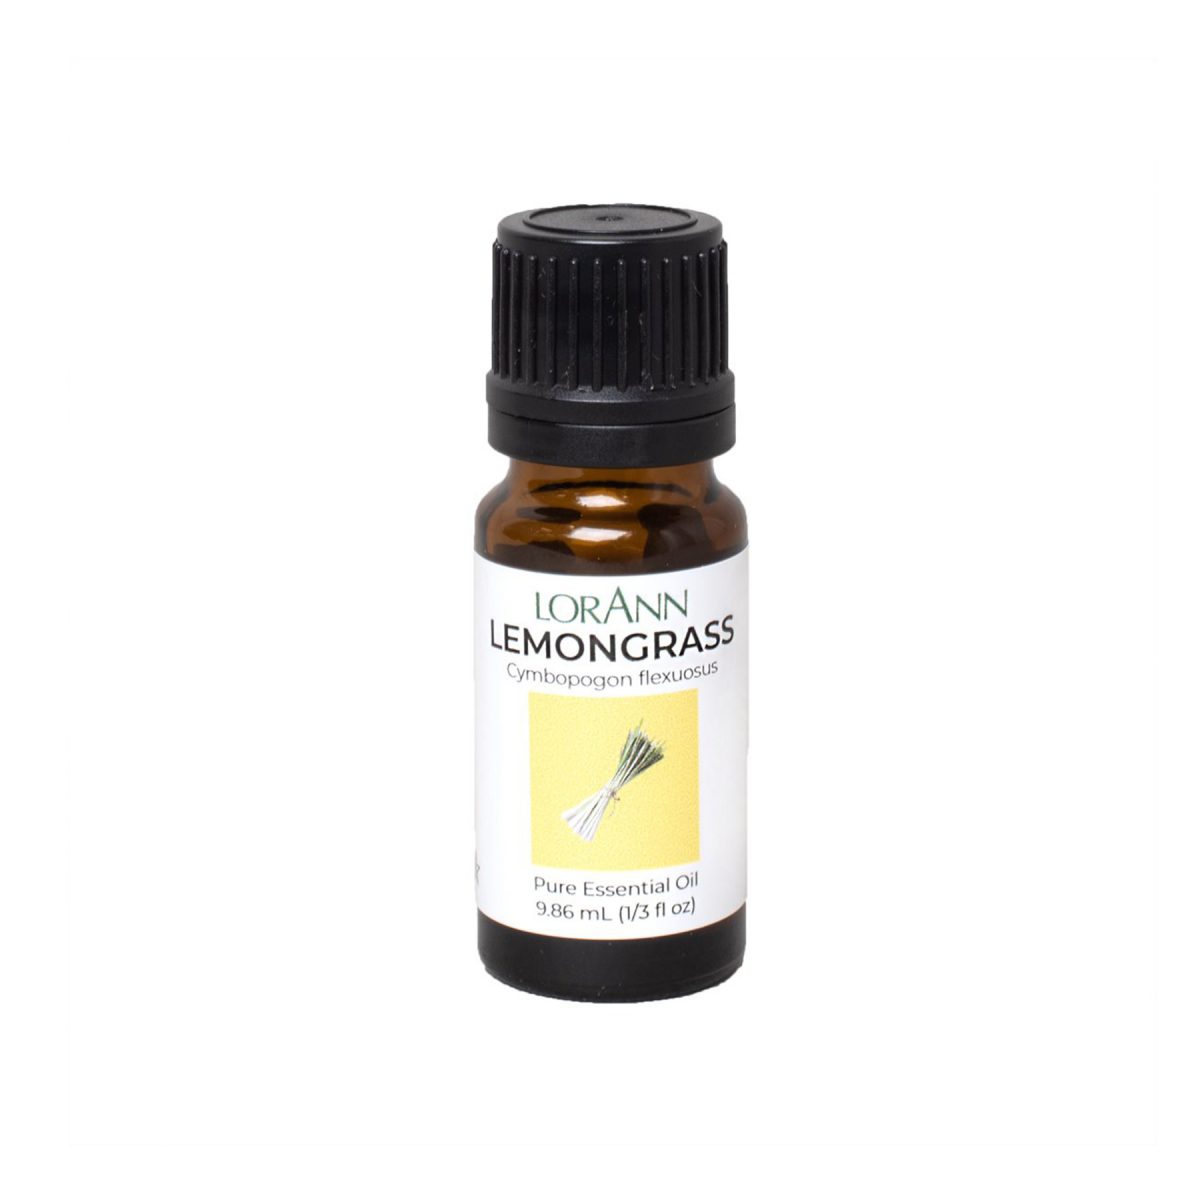 lorann-lemongrass-oil-9.83ml